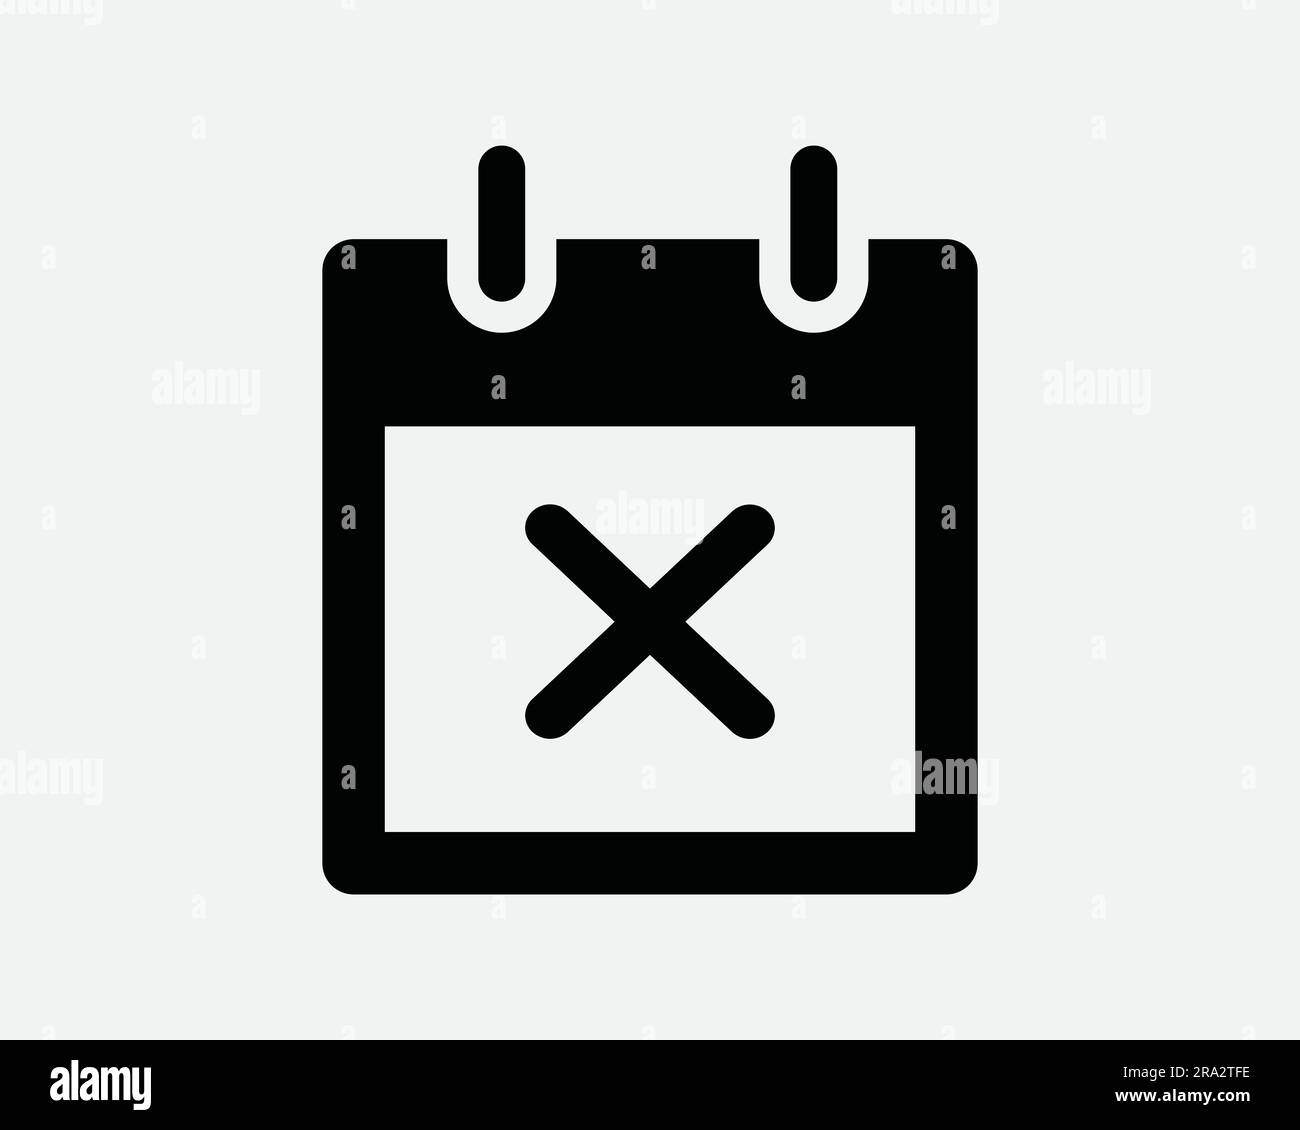 Calendar Event Cancel Icon. Delete Remove Cross X No Date Plan Schedule Appointment Reject Black White Graphic Clipart Artwork Symbol Sign Vector EPS Stock Vector